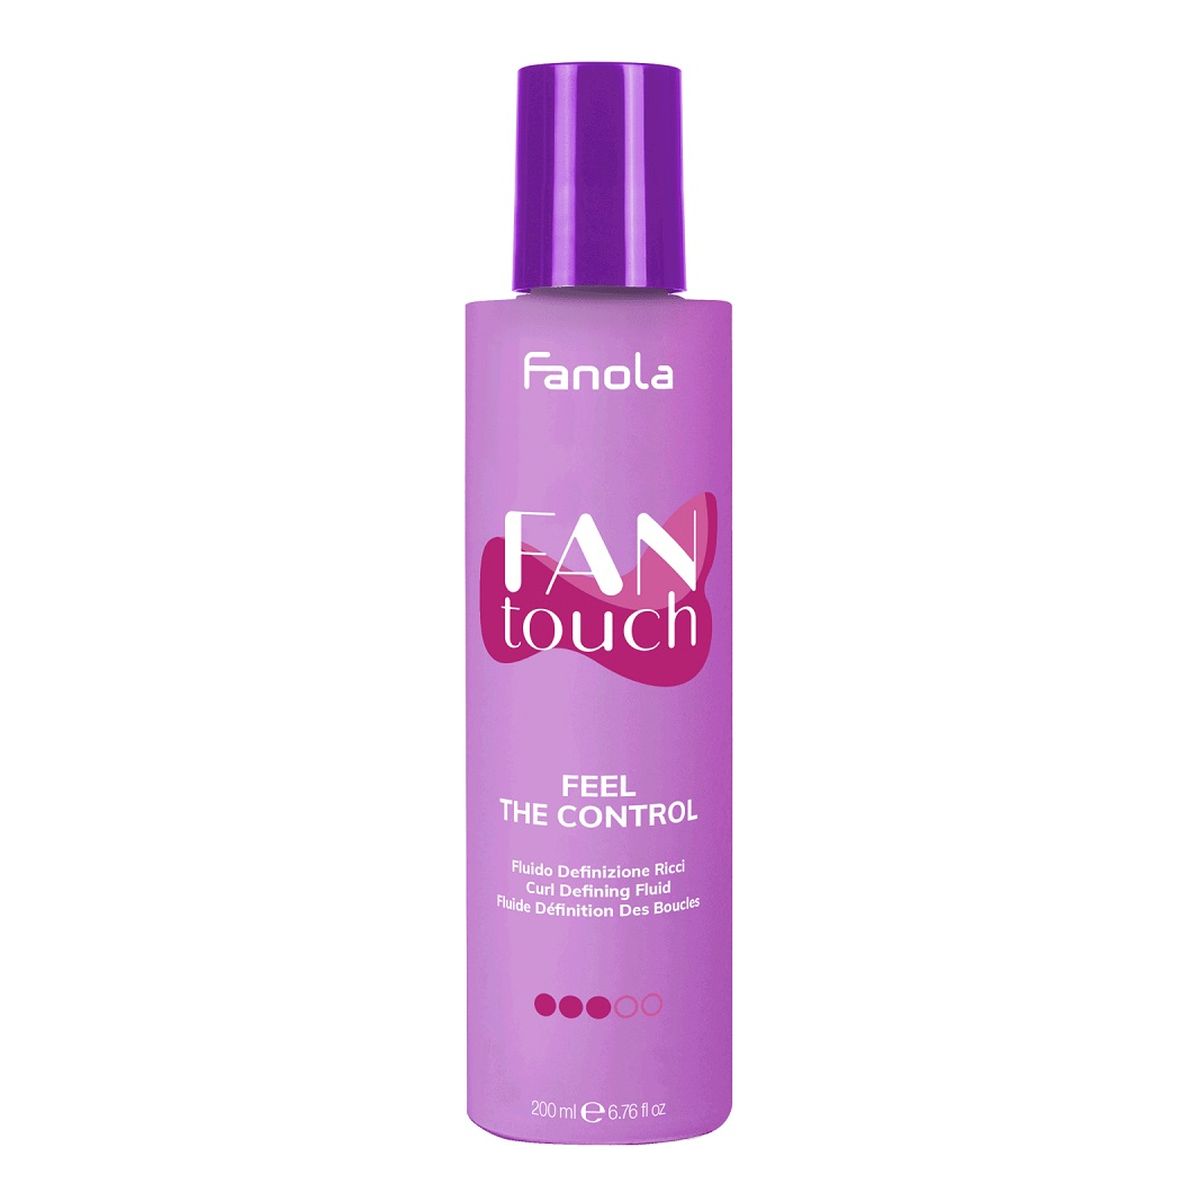 Fanola Fantouch feel the control fluid definiujący loki 200ml